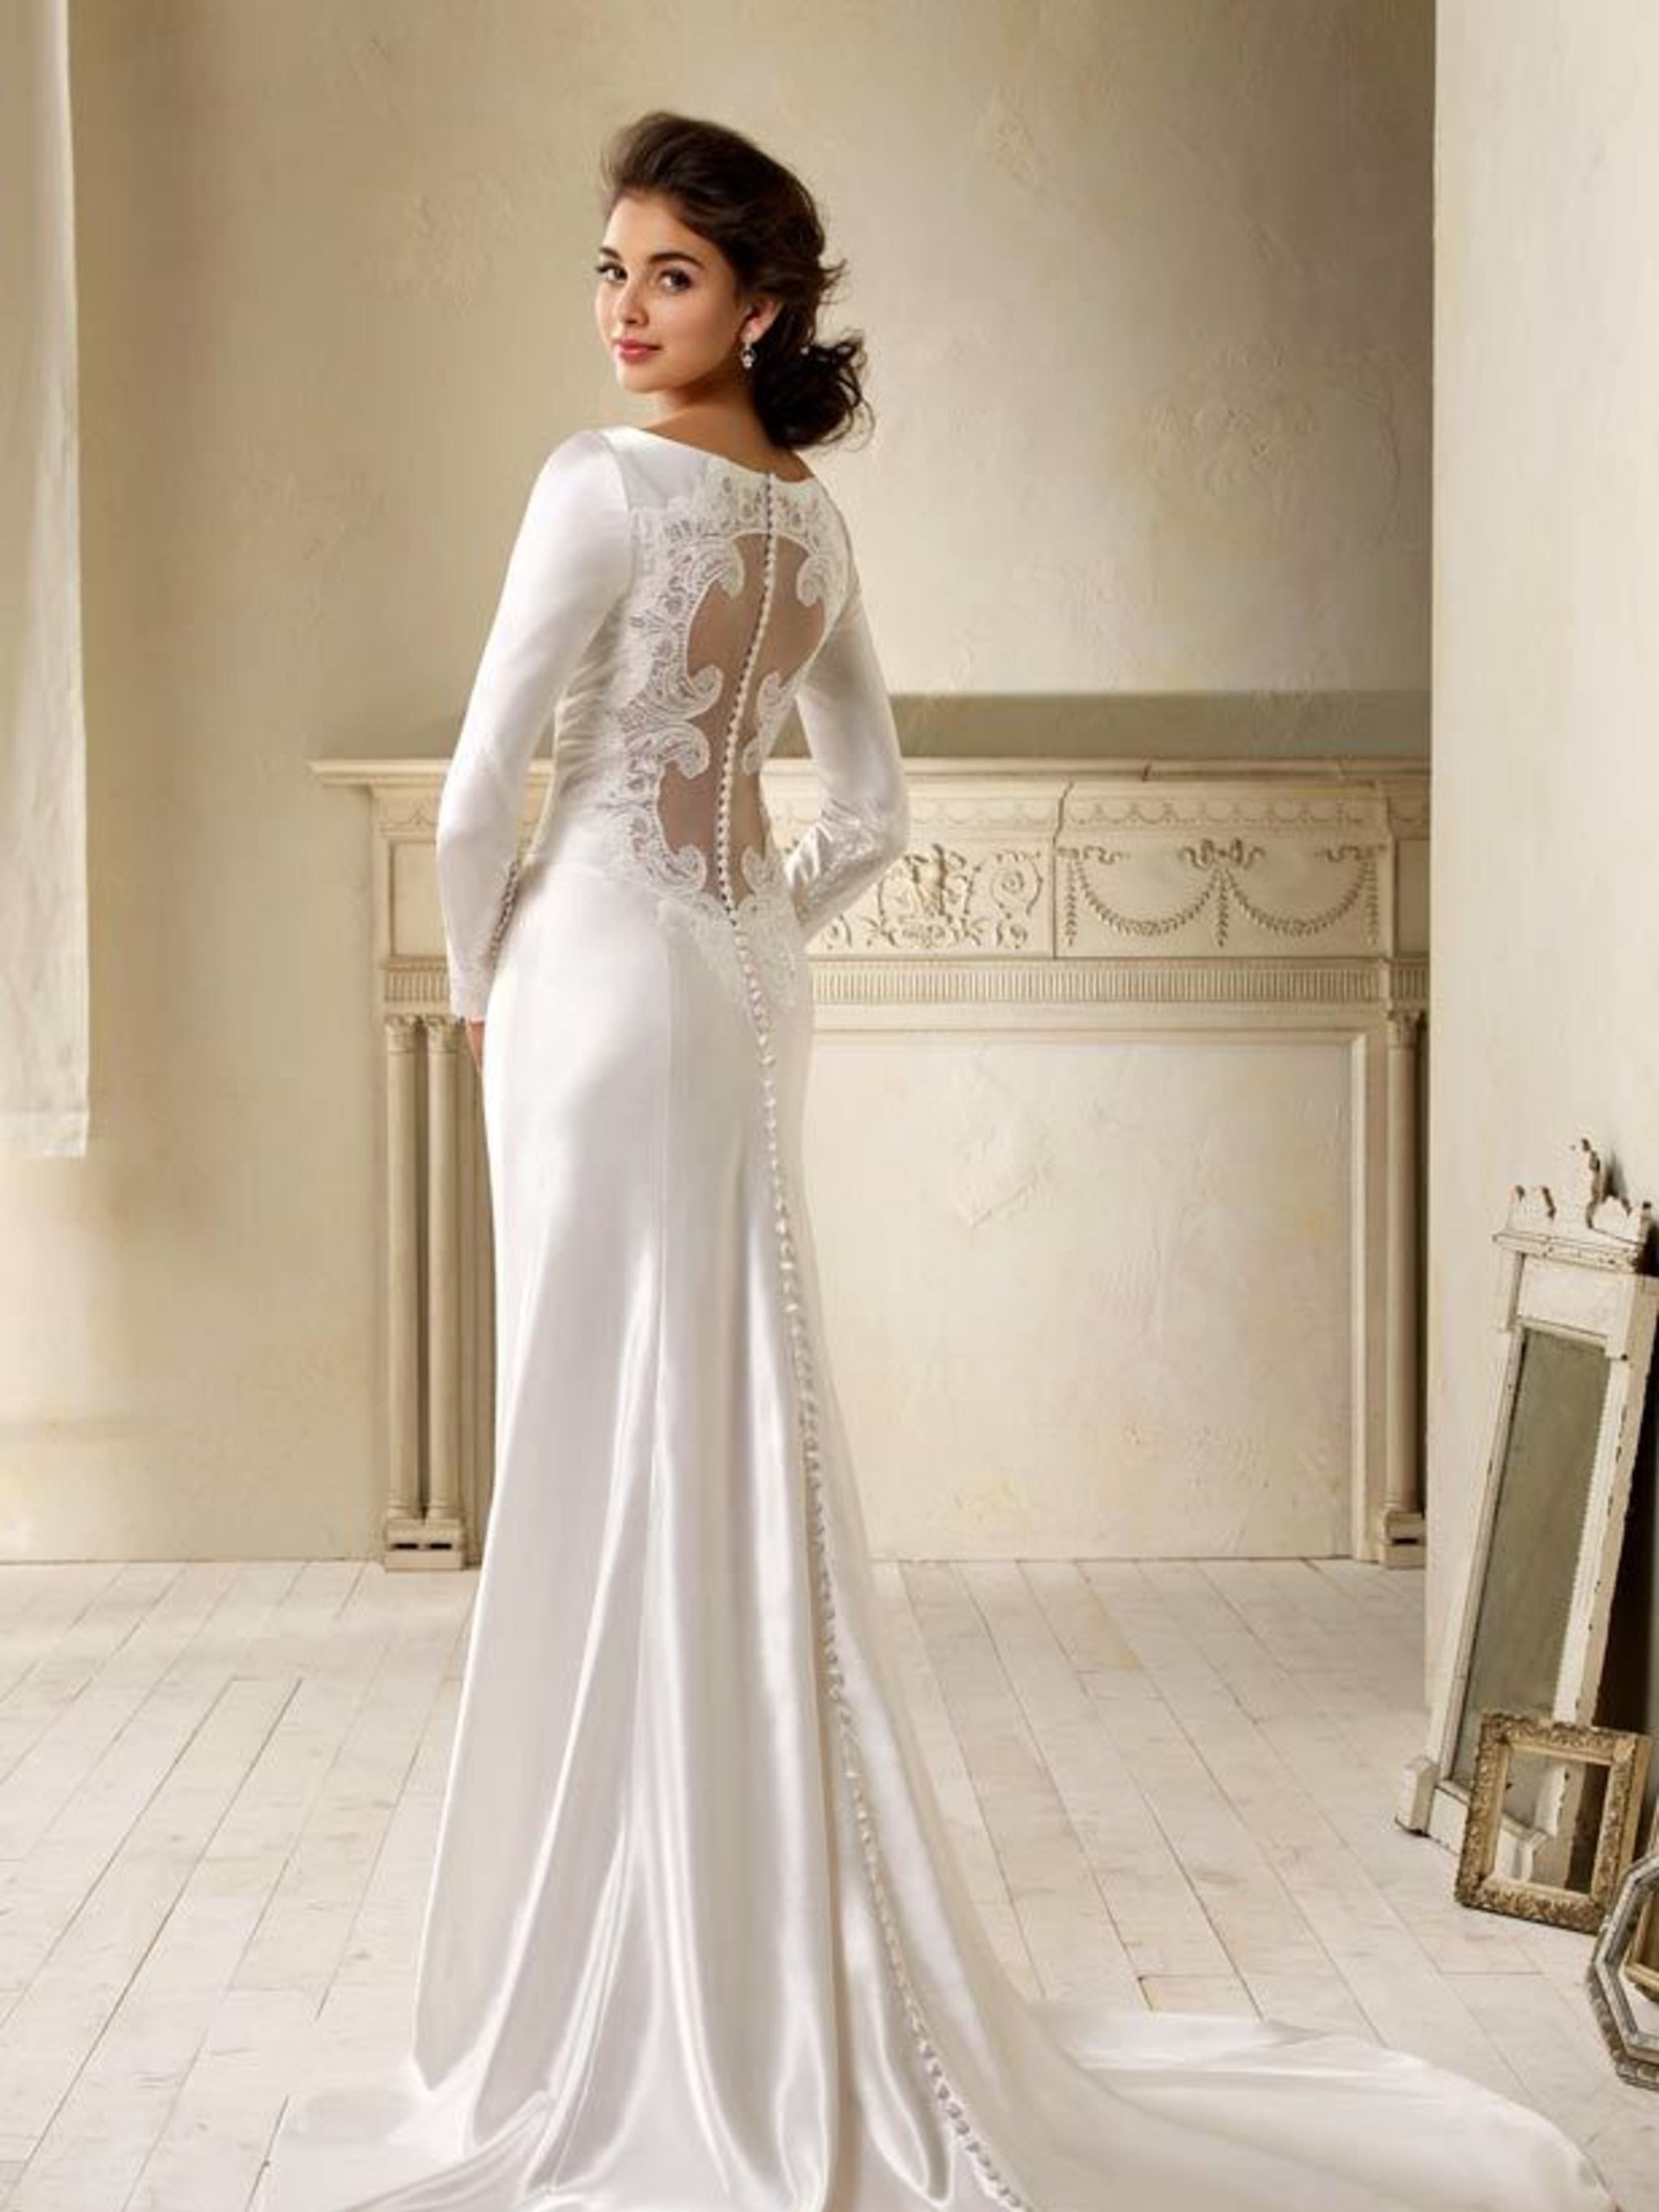 Twilight Wedding Dress to be Sold